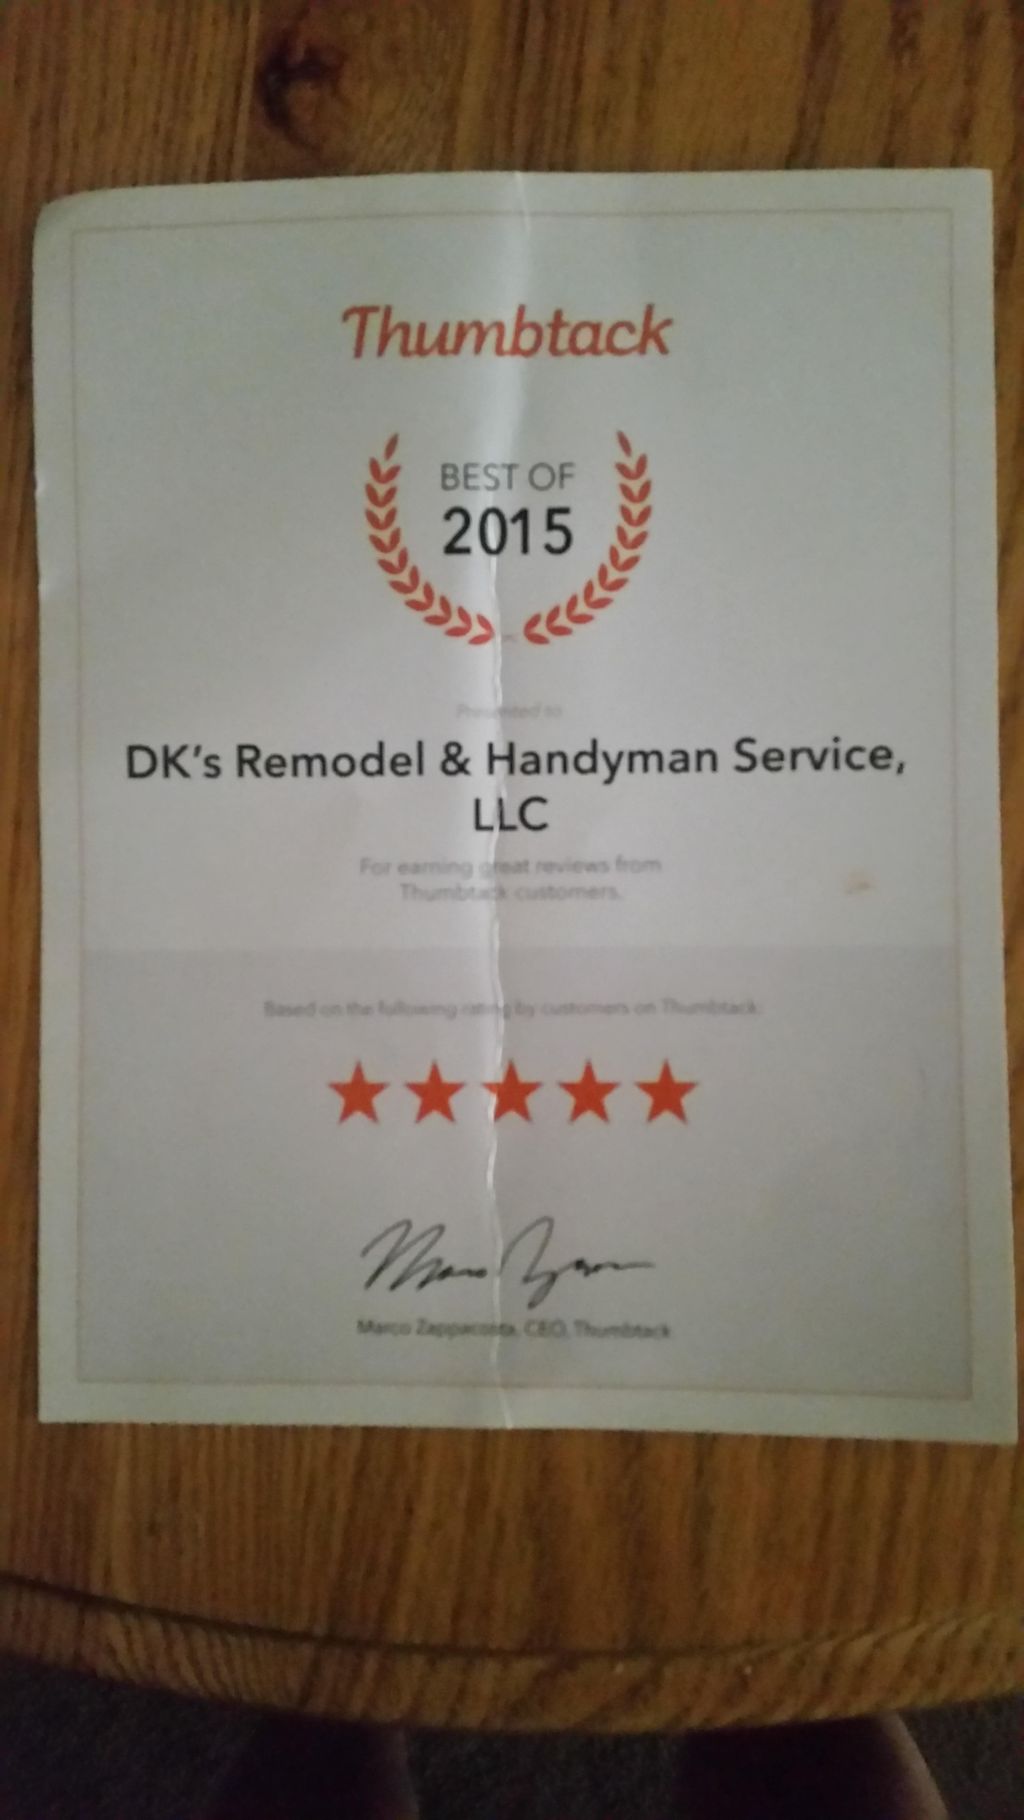 DK's Remodel & Handyman Service, LLC